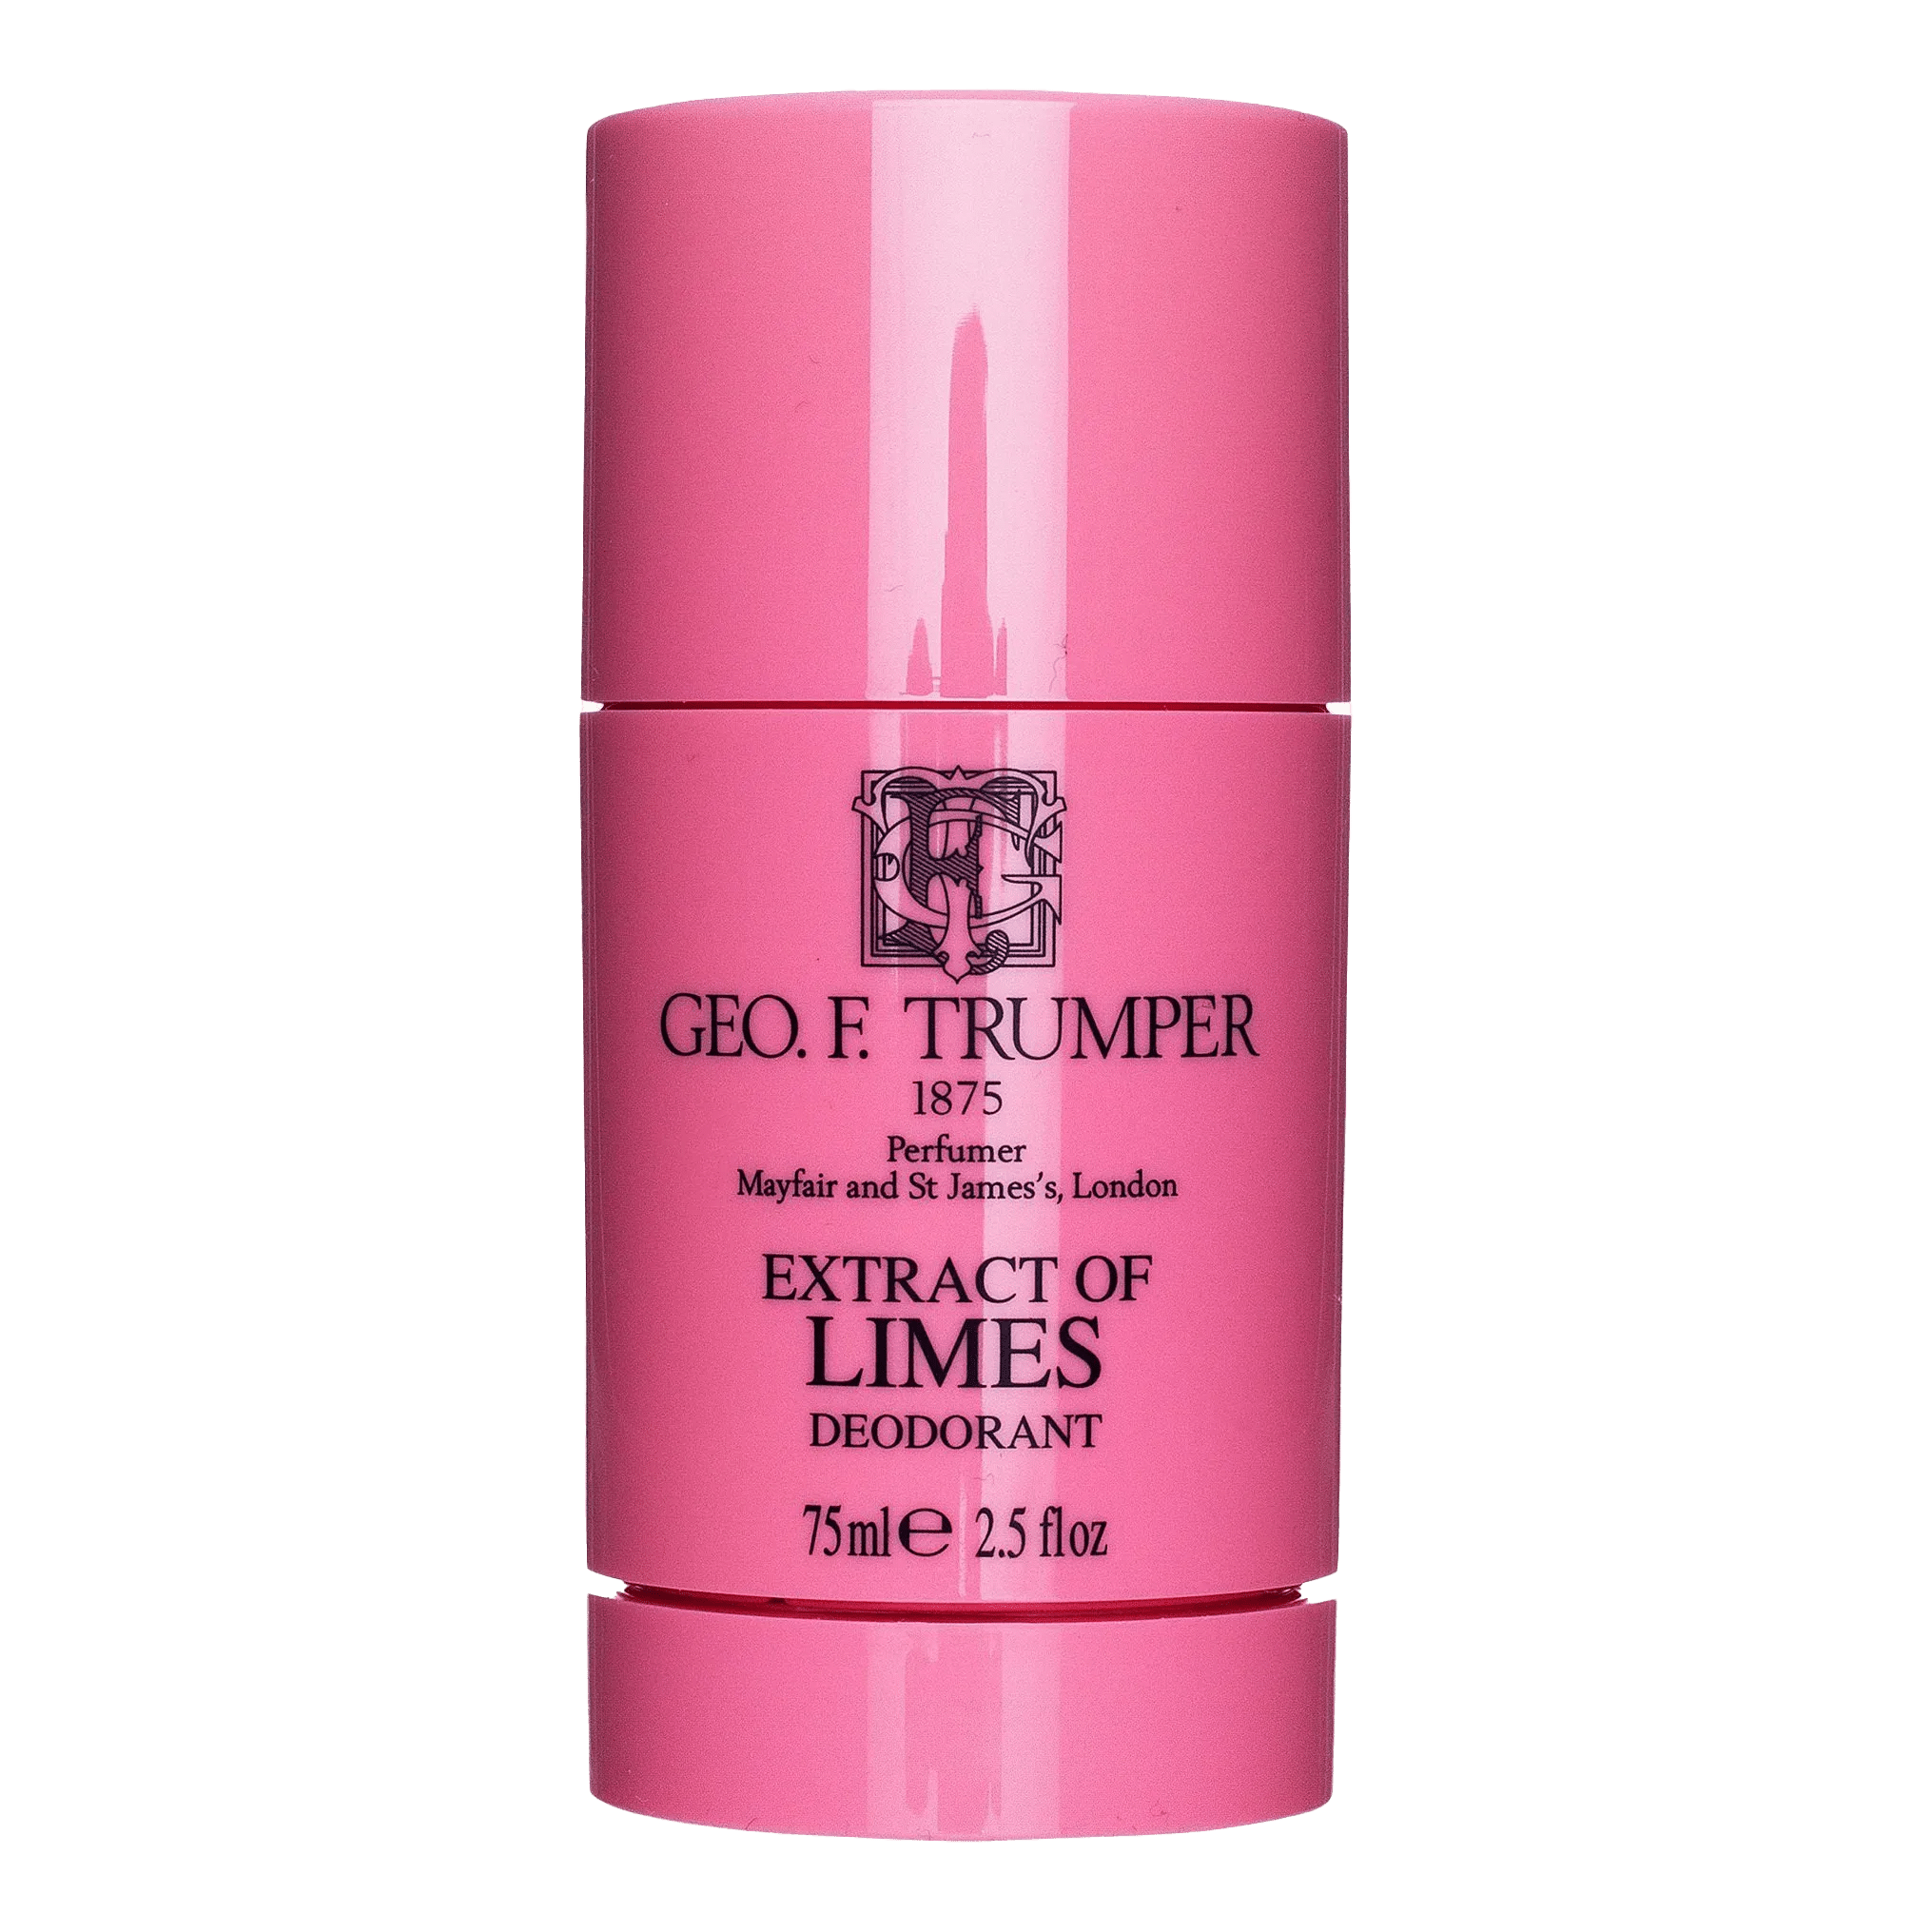 Geo F. Trumper deodorant - Extract of Limes